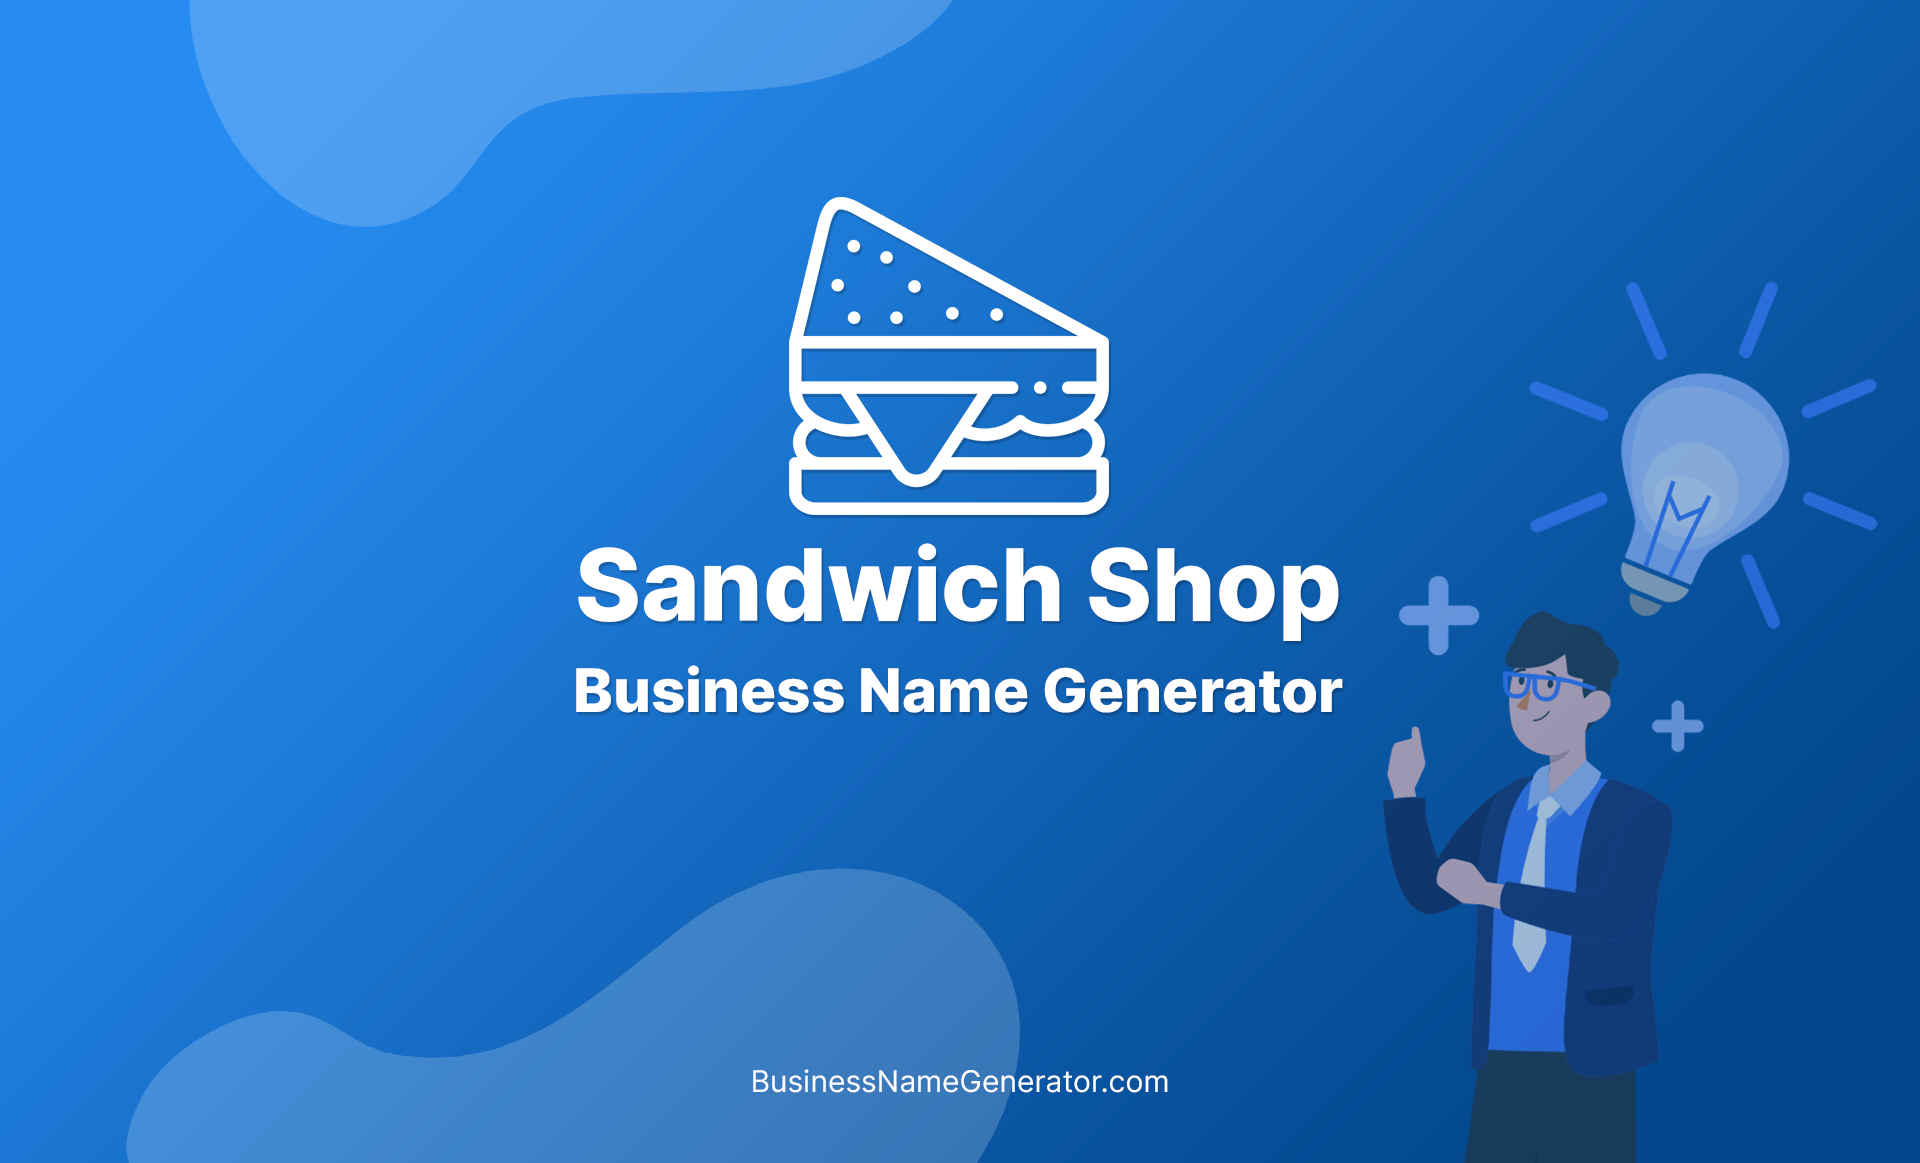 Sandwich Shop Business Name Generator